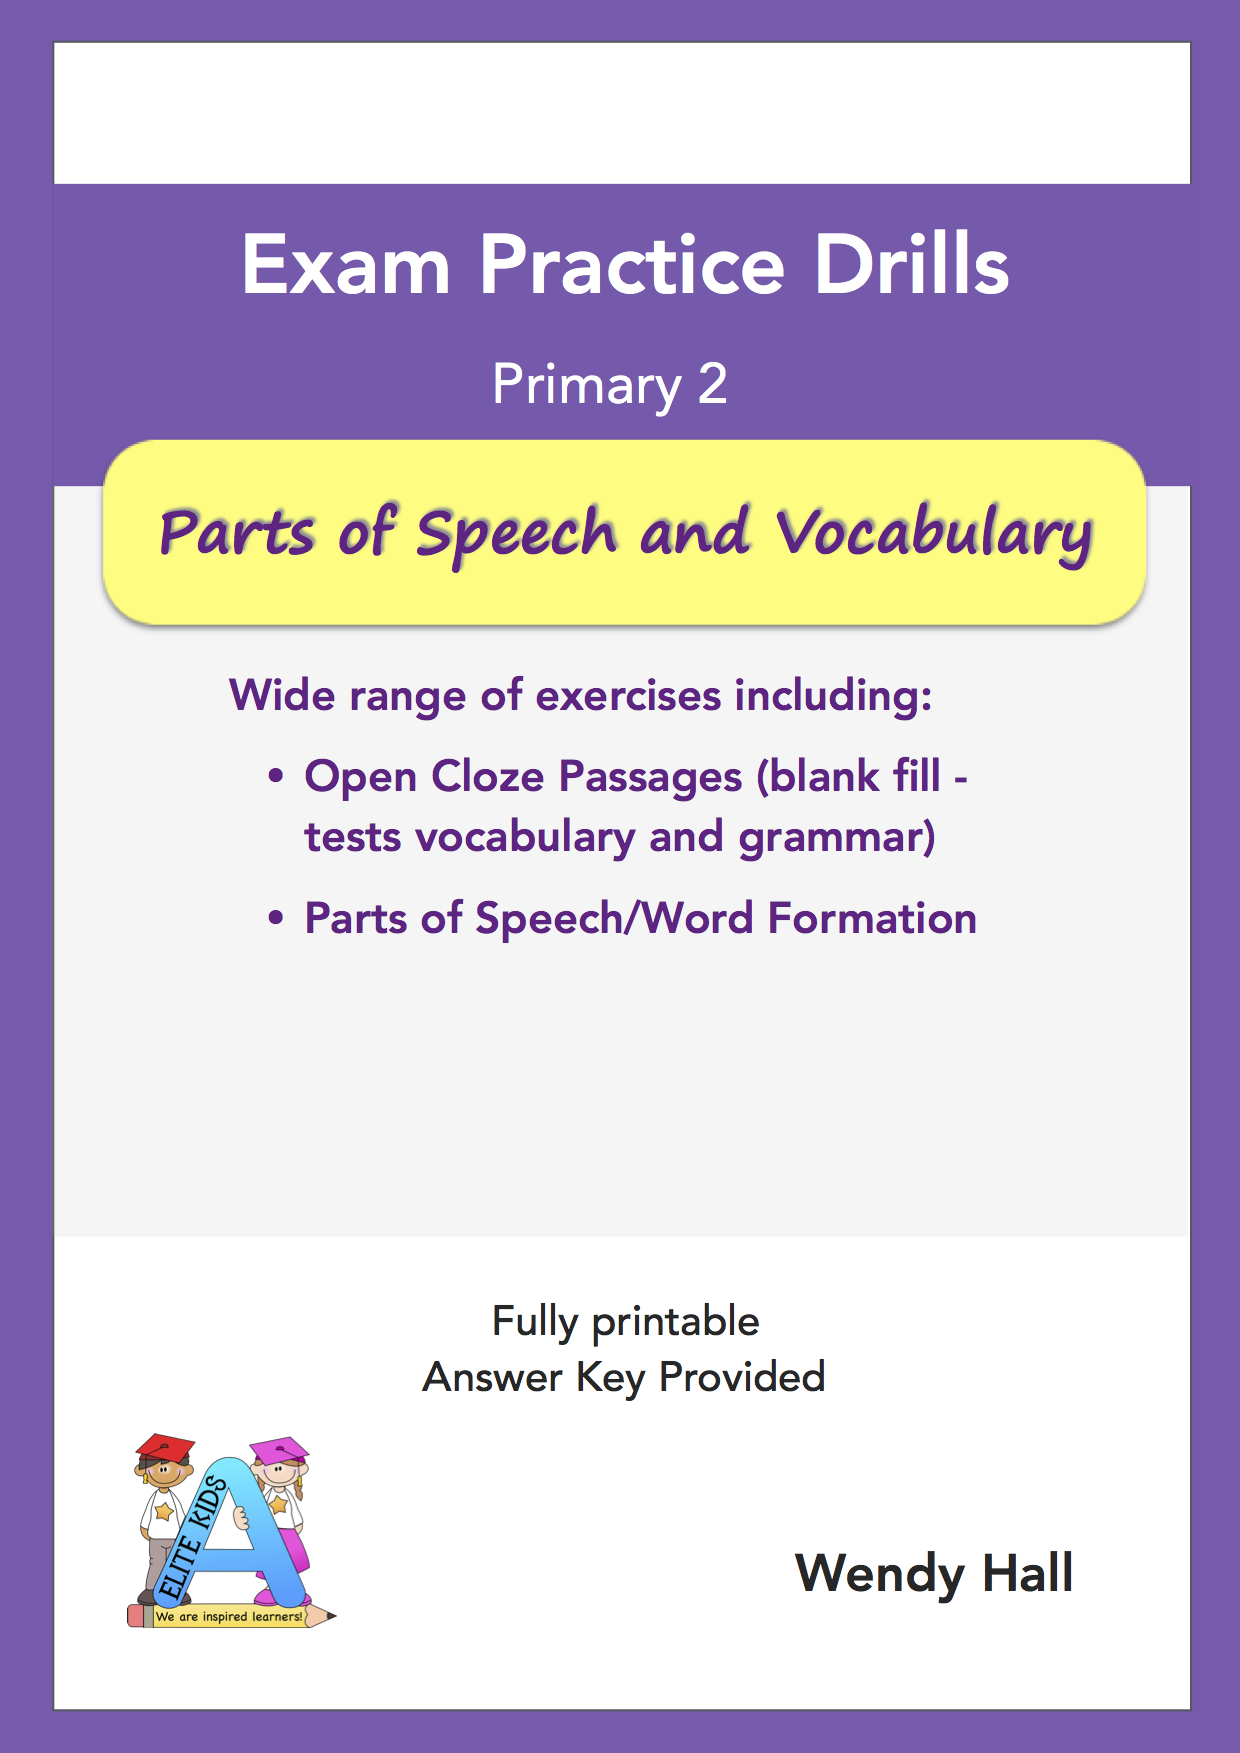 Elite Kids | Exam Practice Drills - Parts of speech and vocabulary - Primary 2